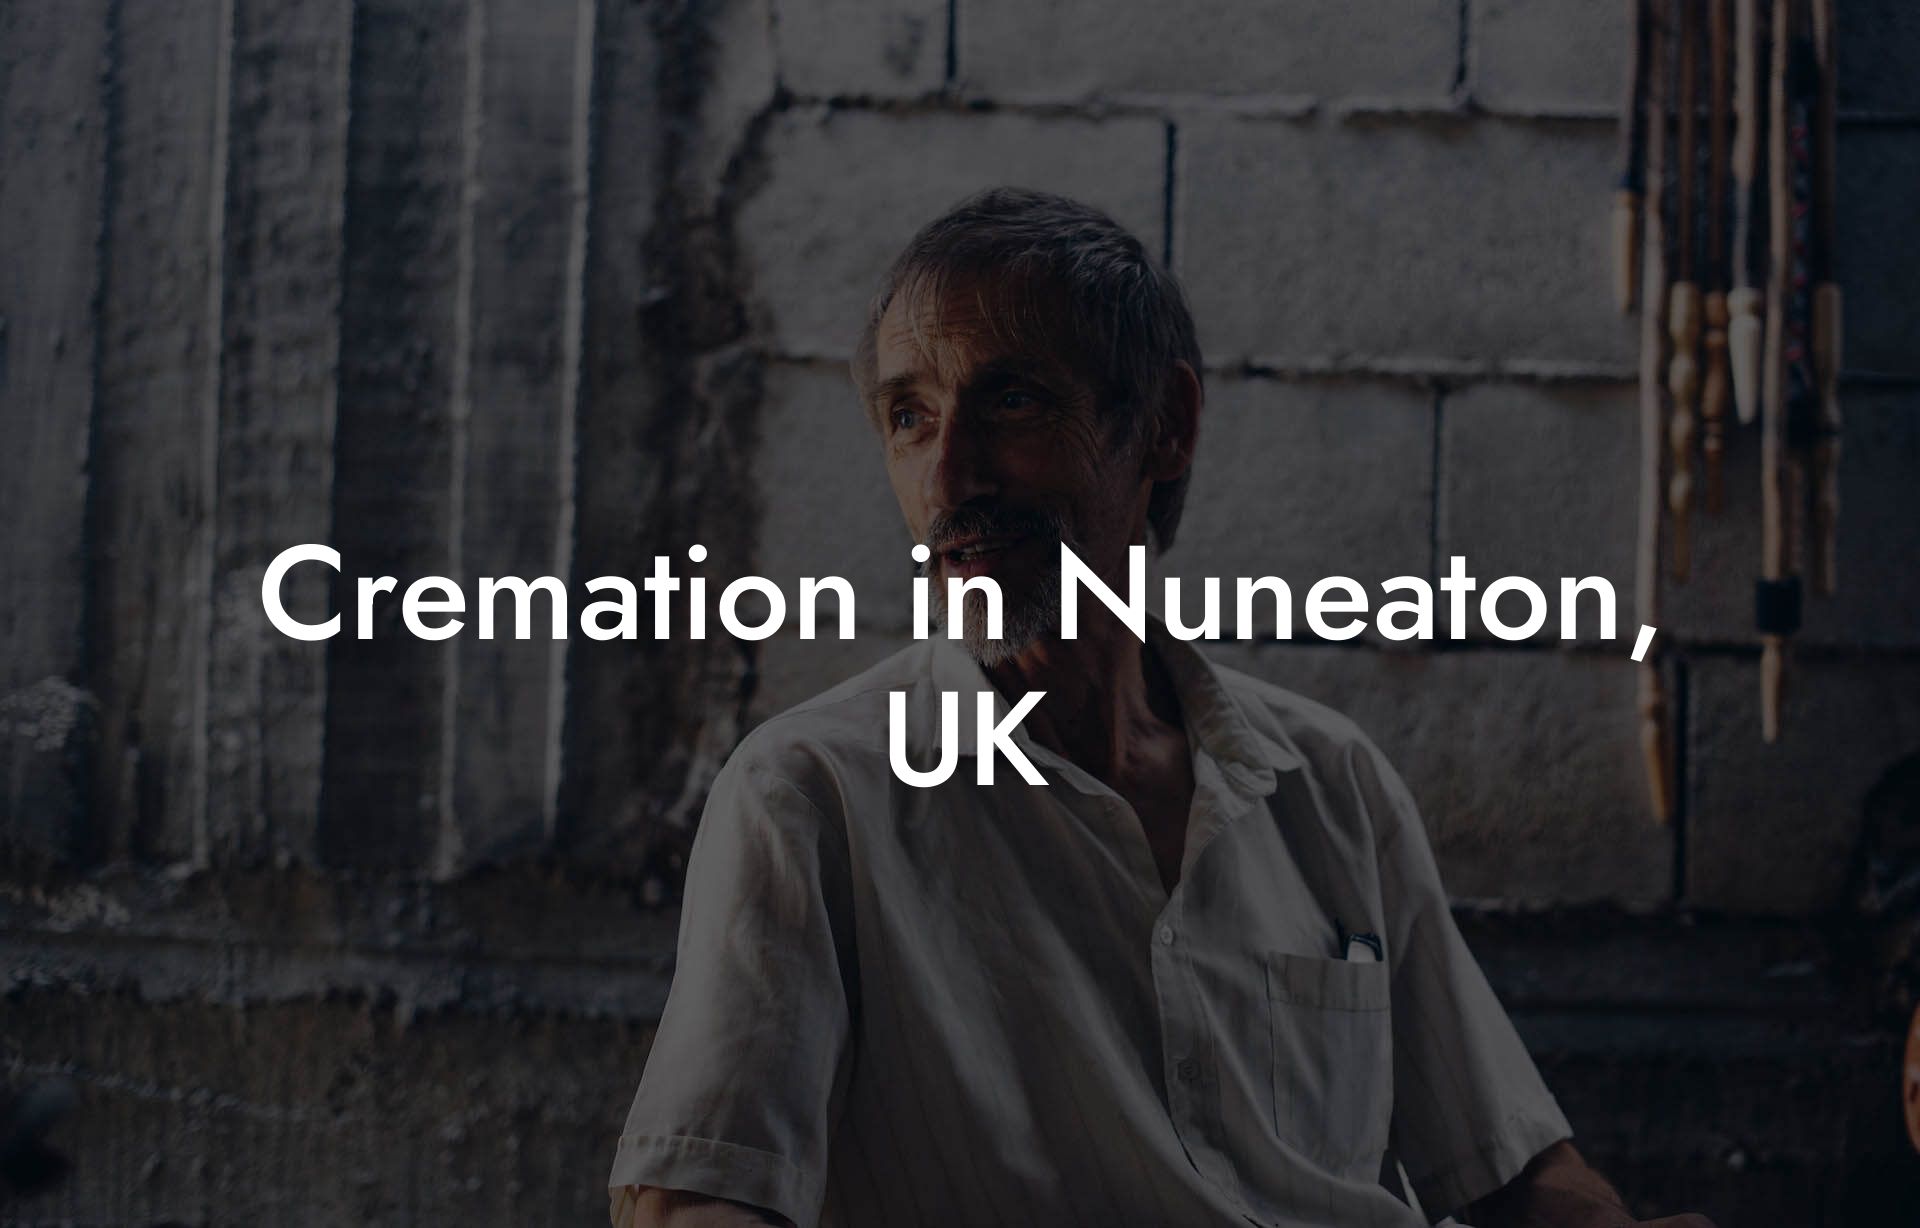 Cremation in Nuneaton, UK